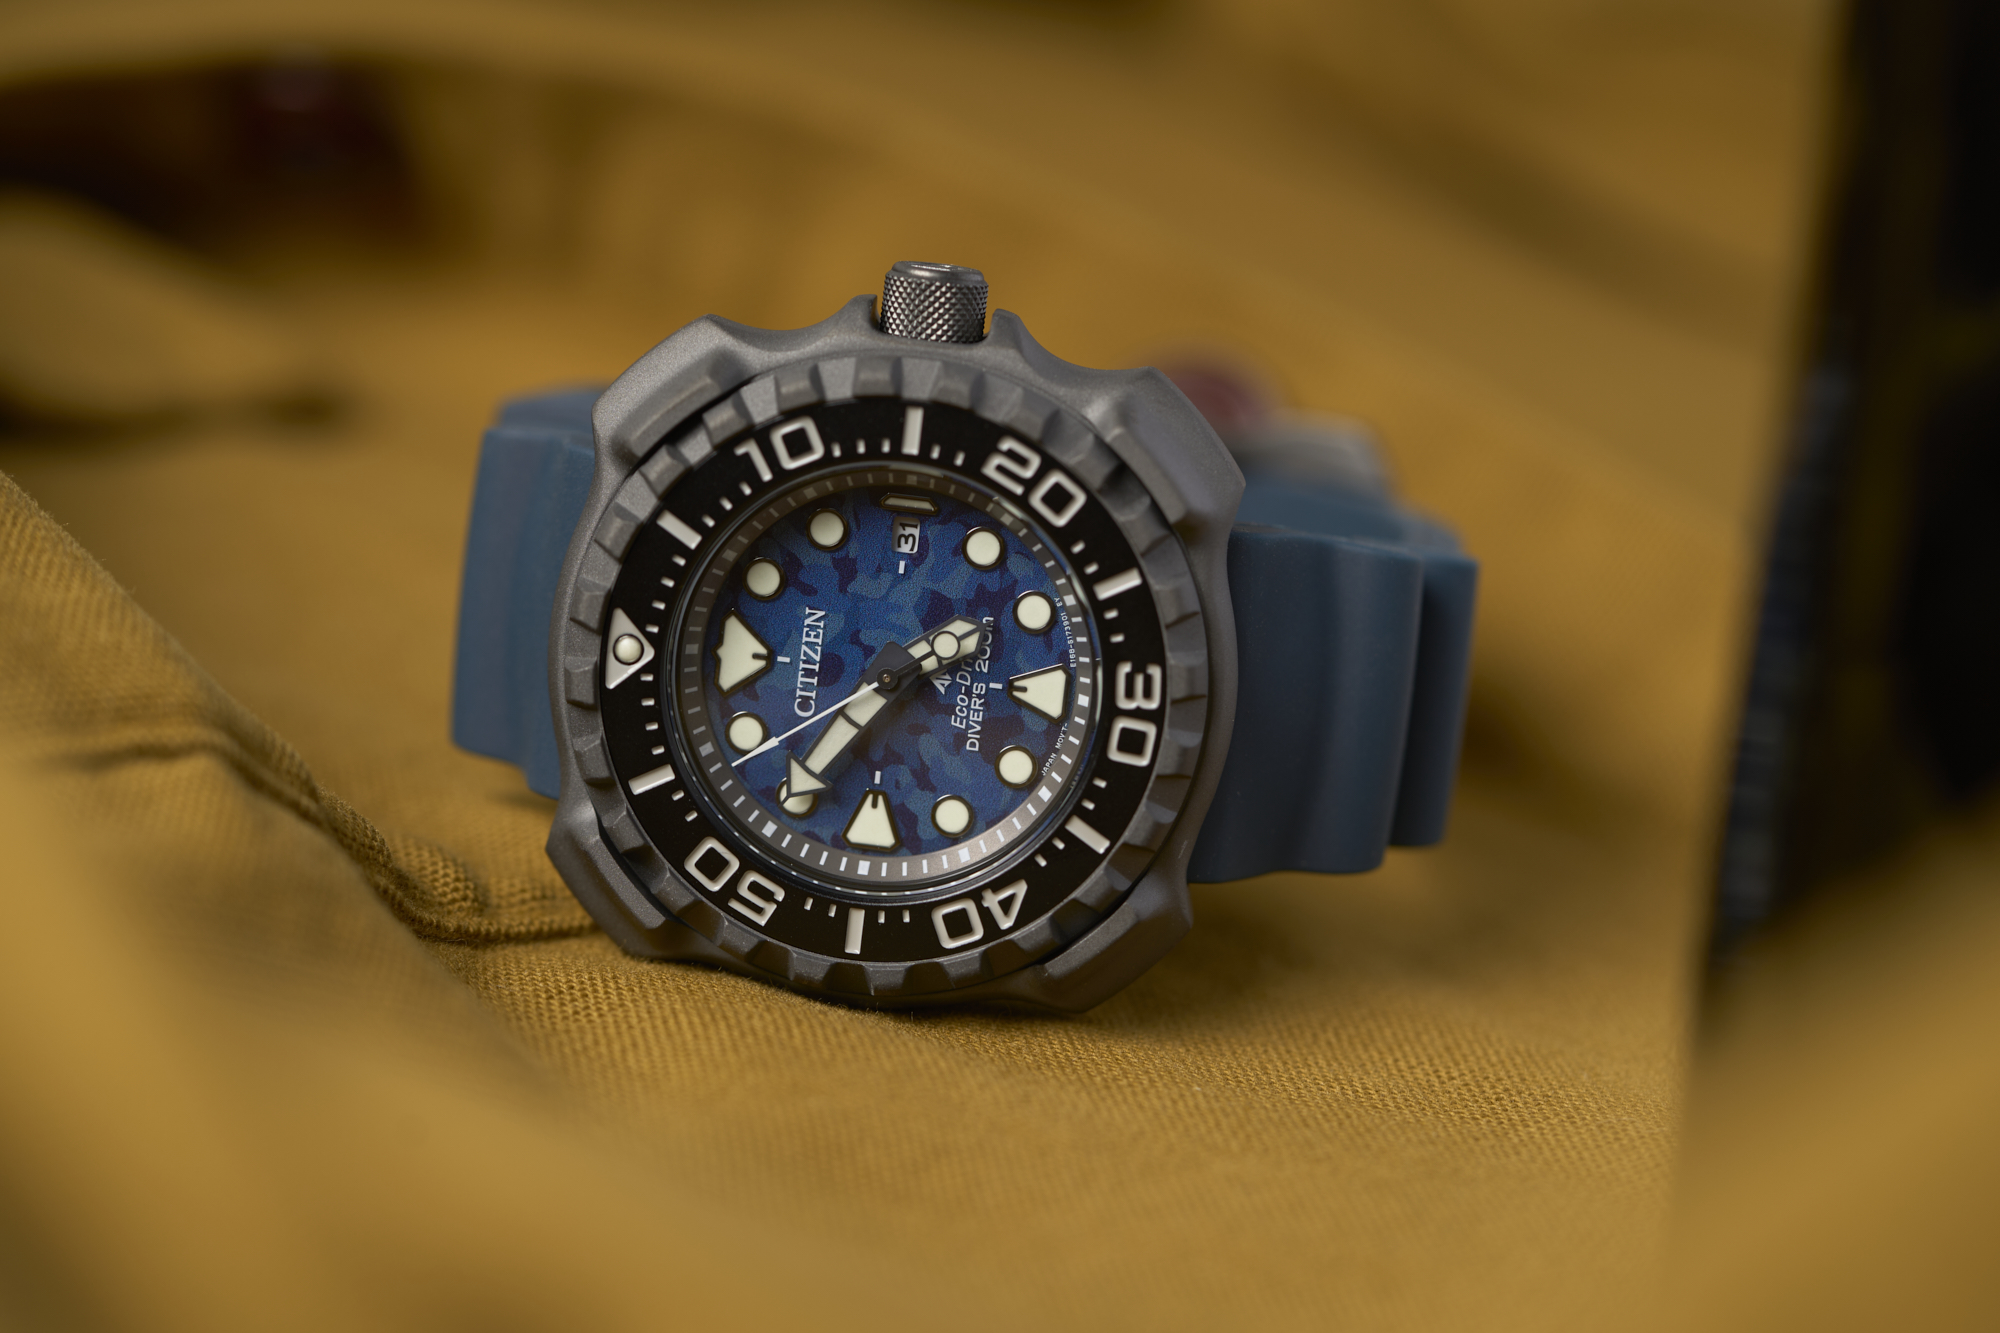 Citizen Watch - Promaster Diver's Eco-Drive 200mt 37mm Blue - 0